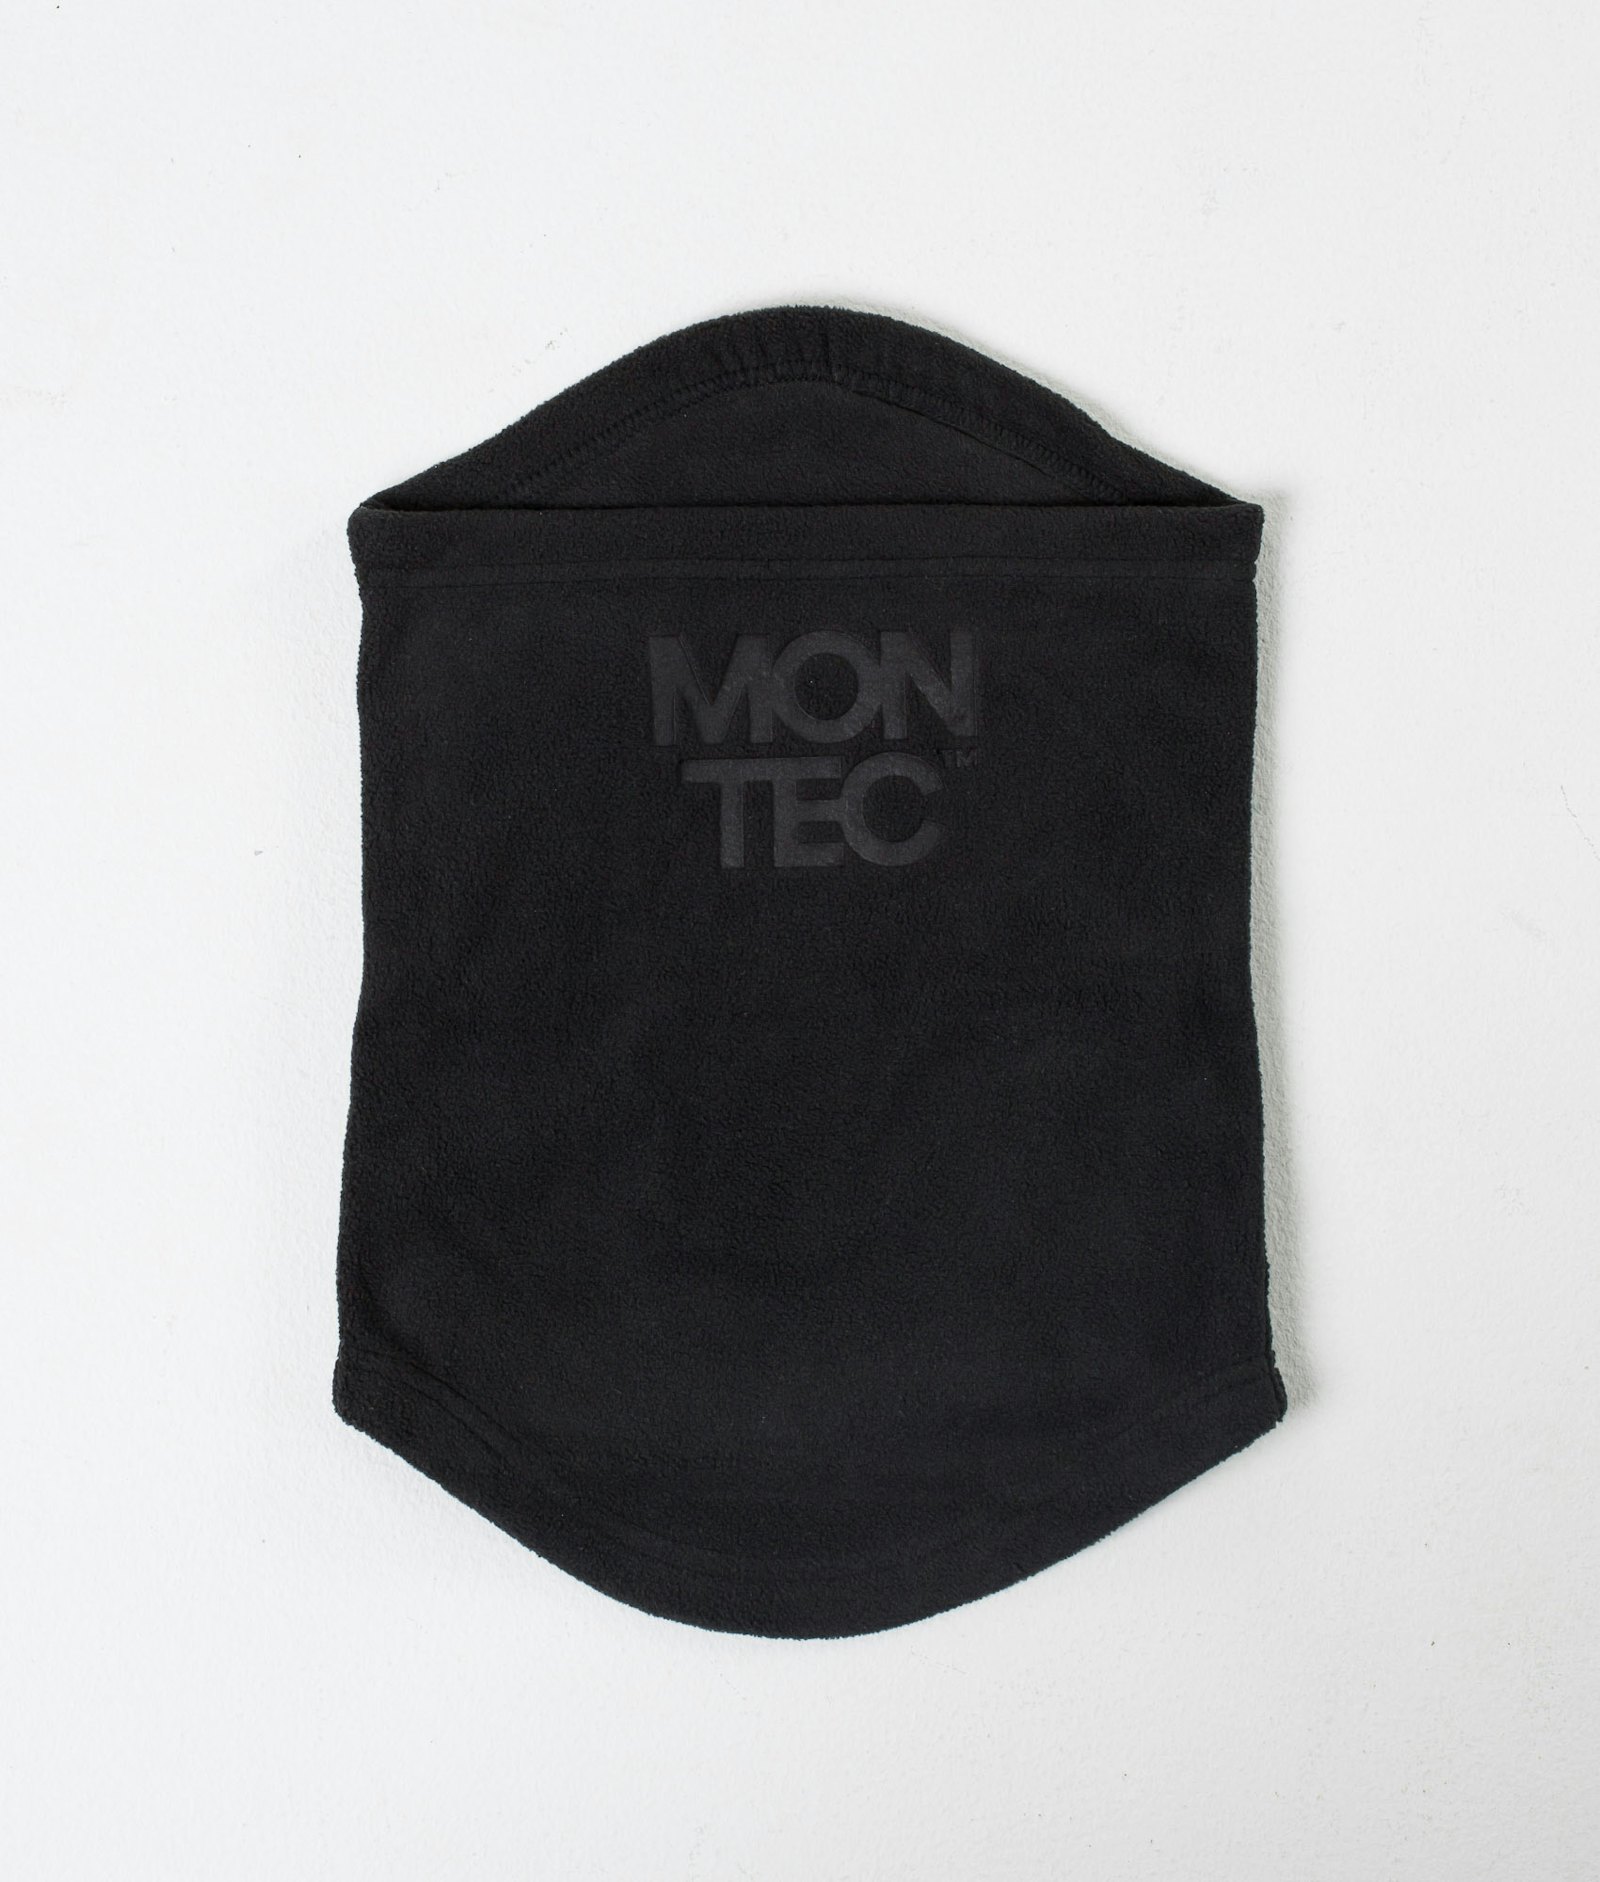 Montec Echo Tube Facemask Black